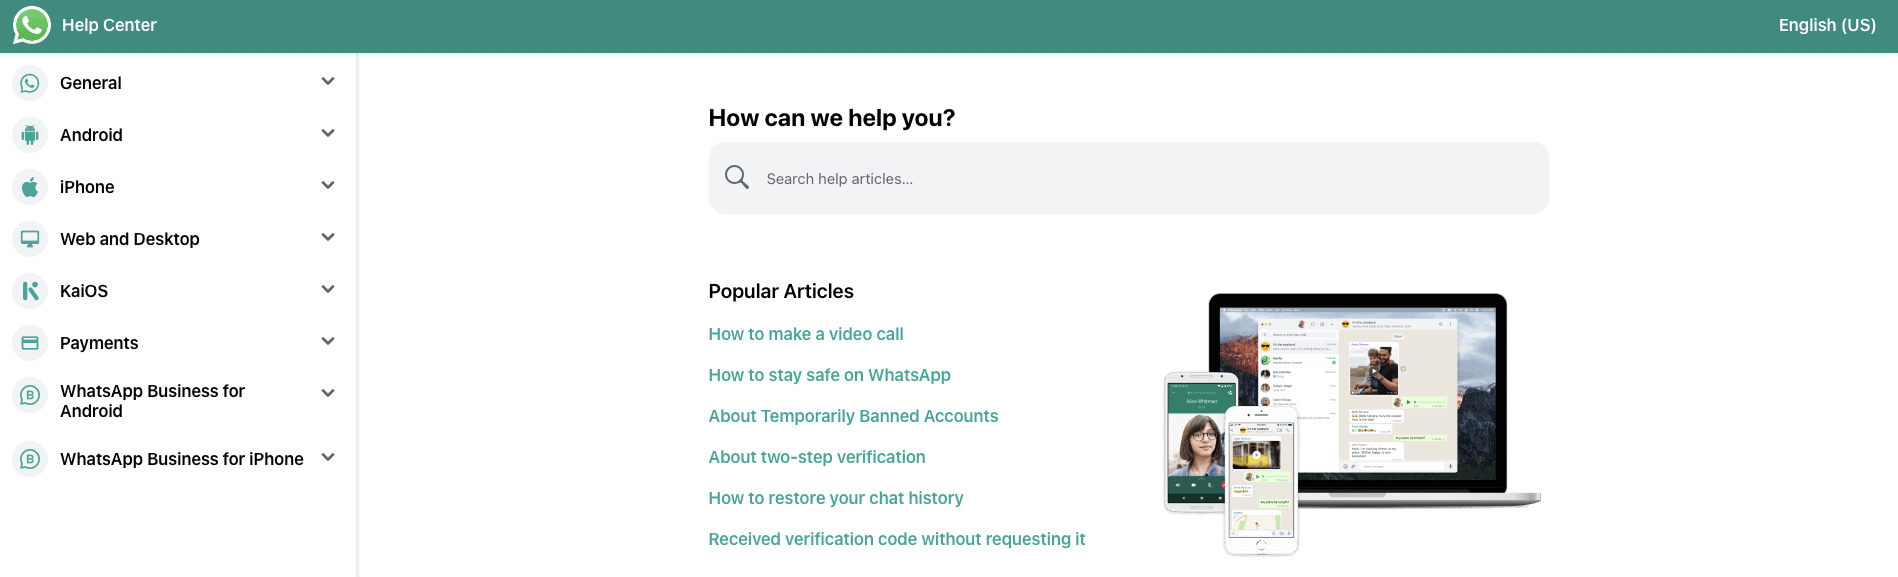 Whats App FAQ Page